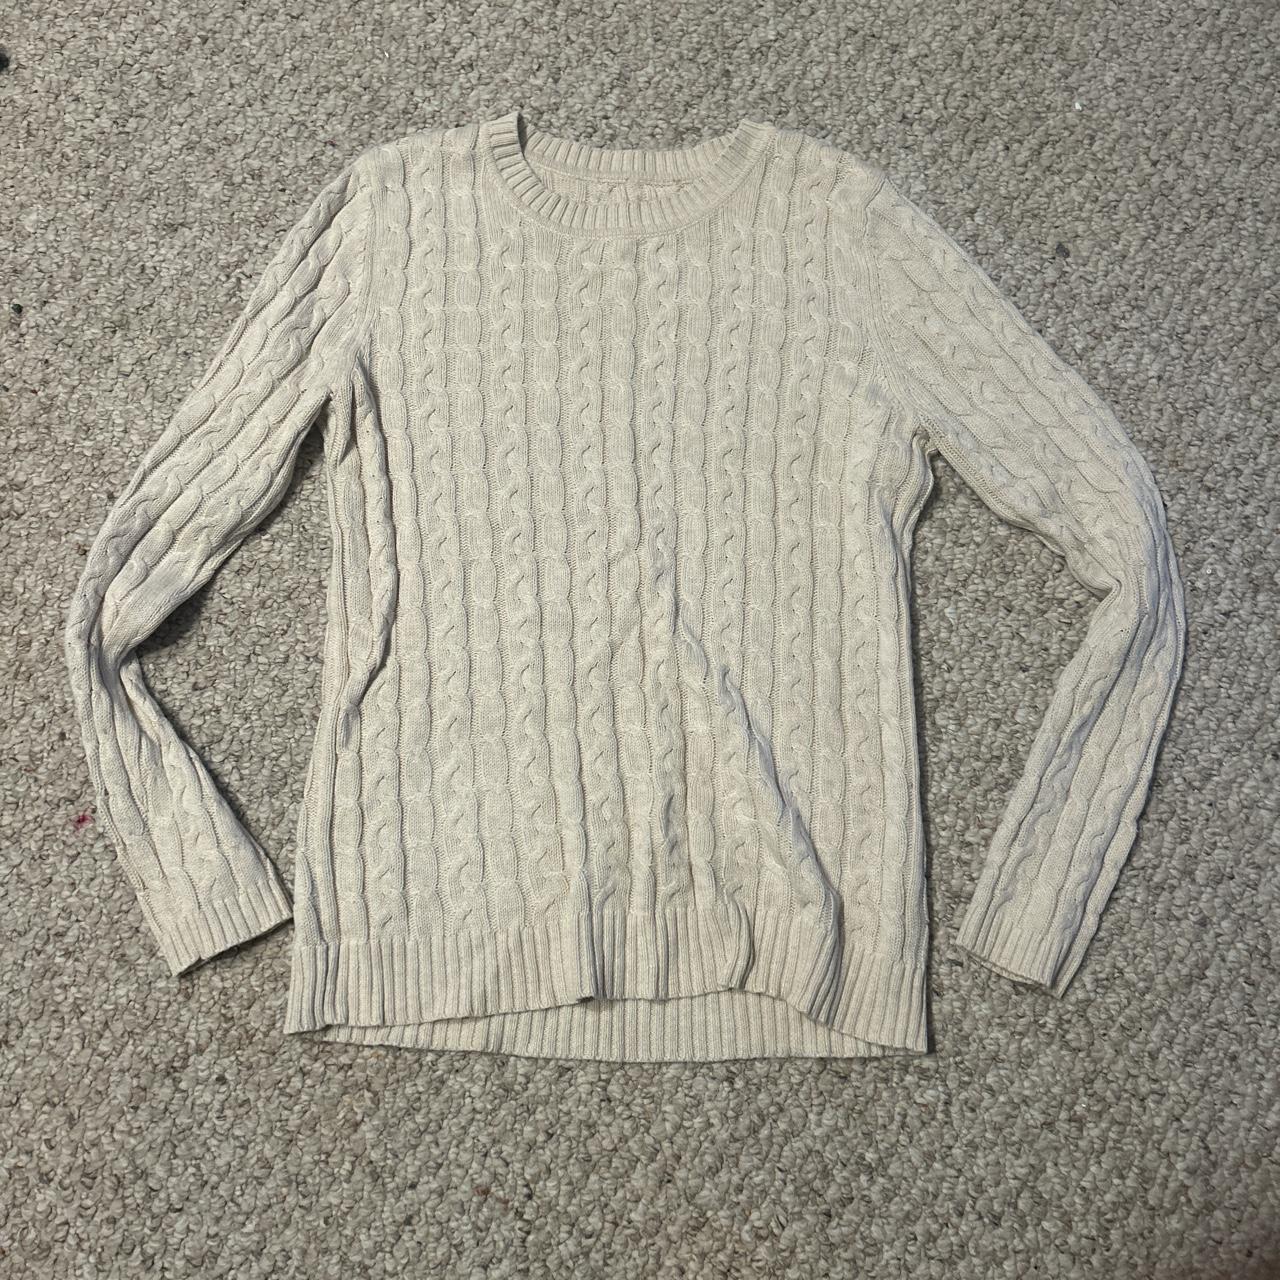 Versatile White knit sweater, coquette girly sweater... - Depop